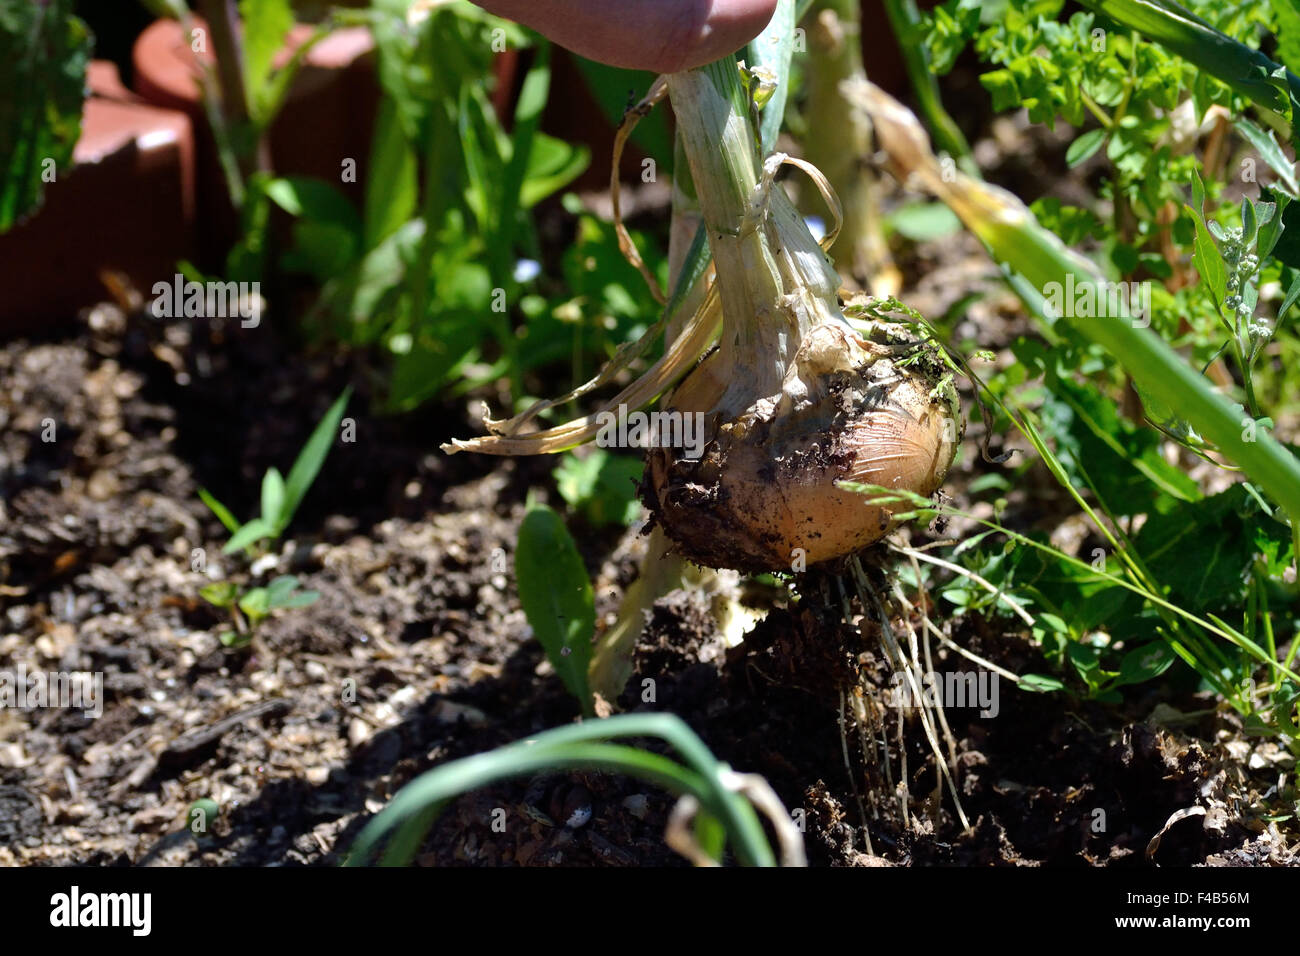 Onion crop in your garden Stock Photo